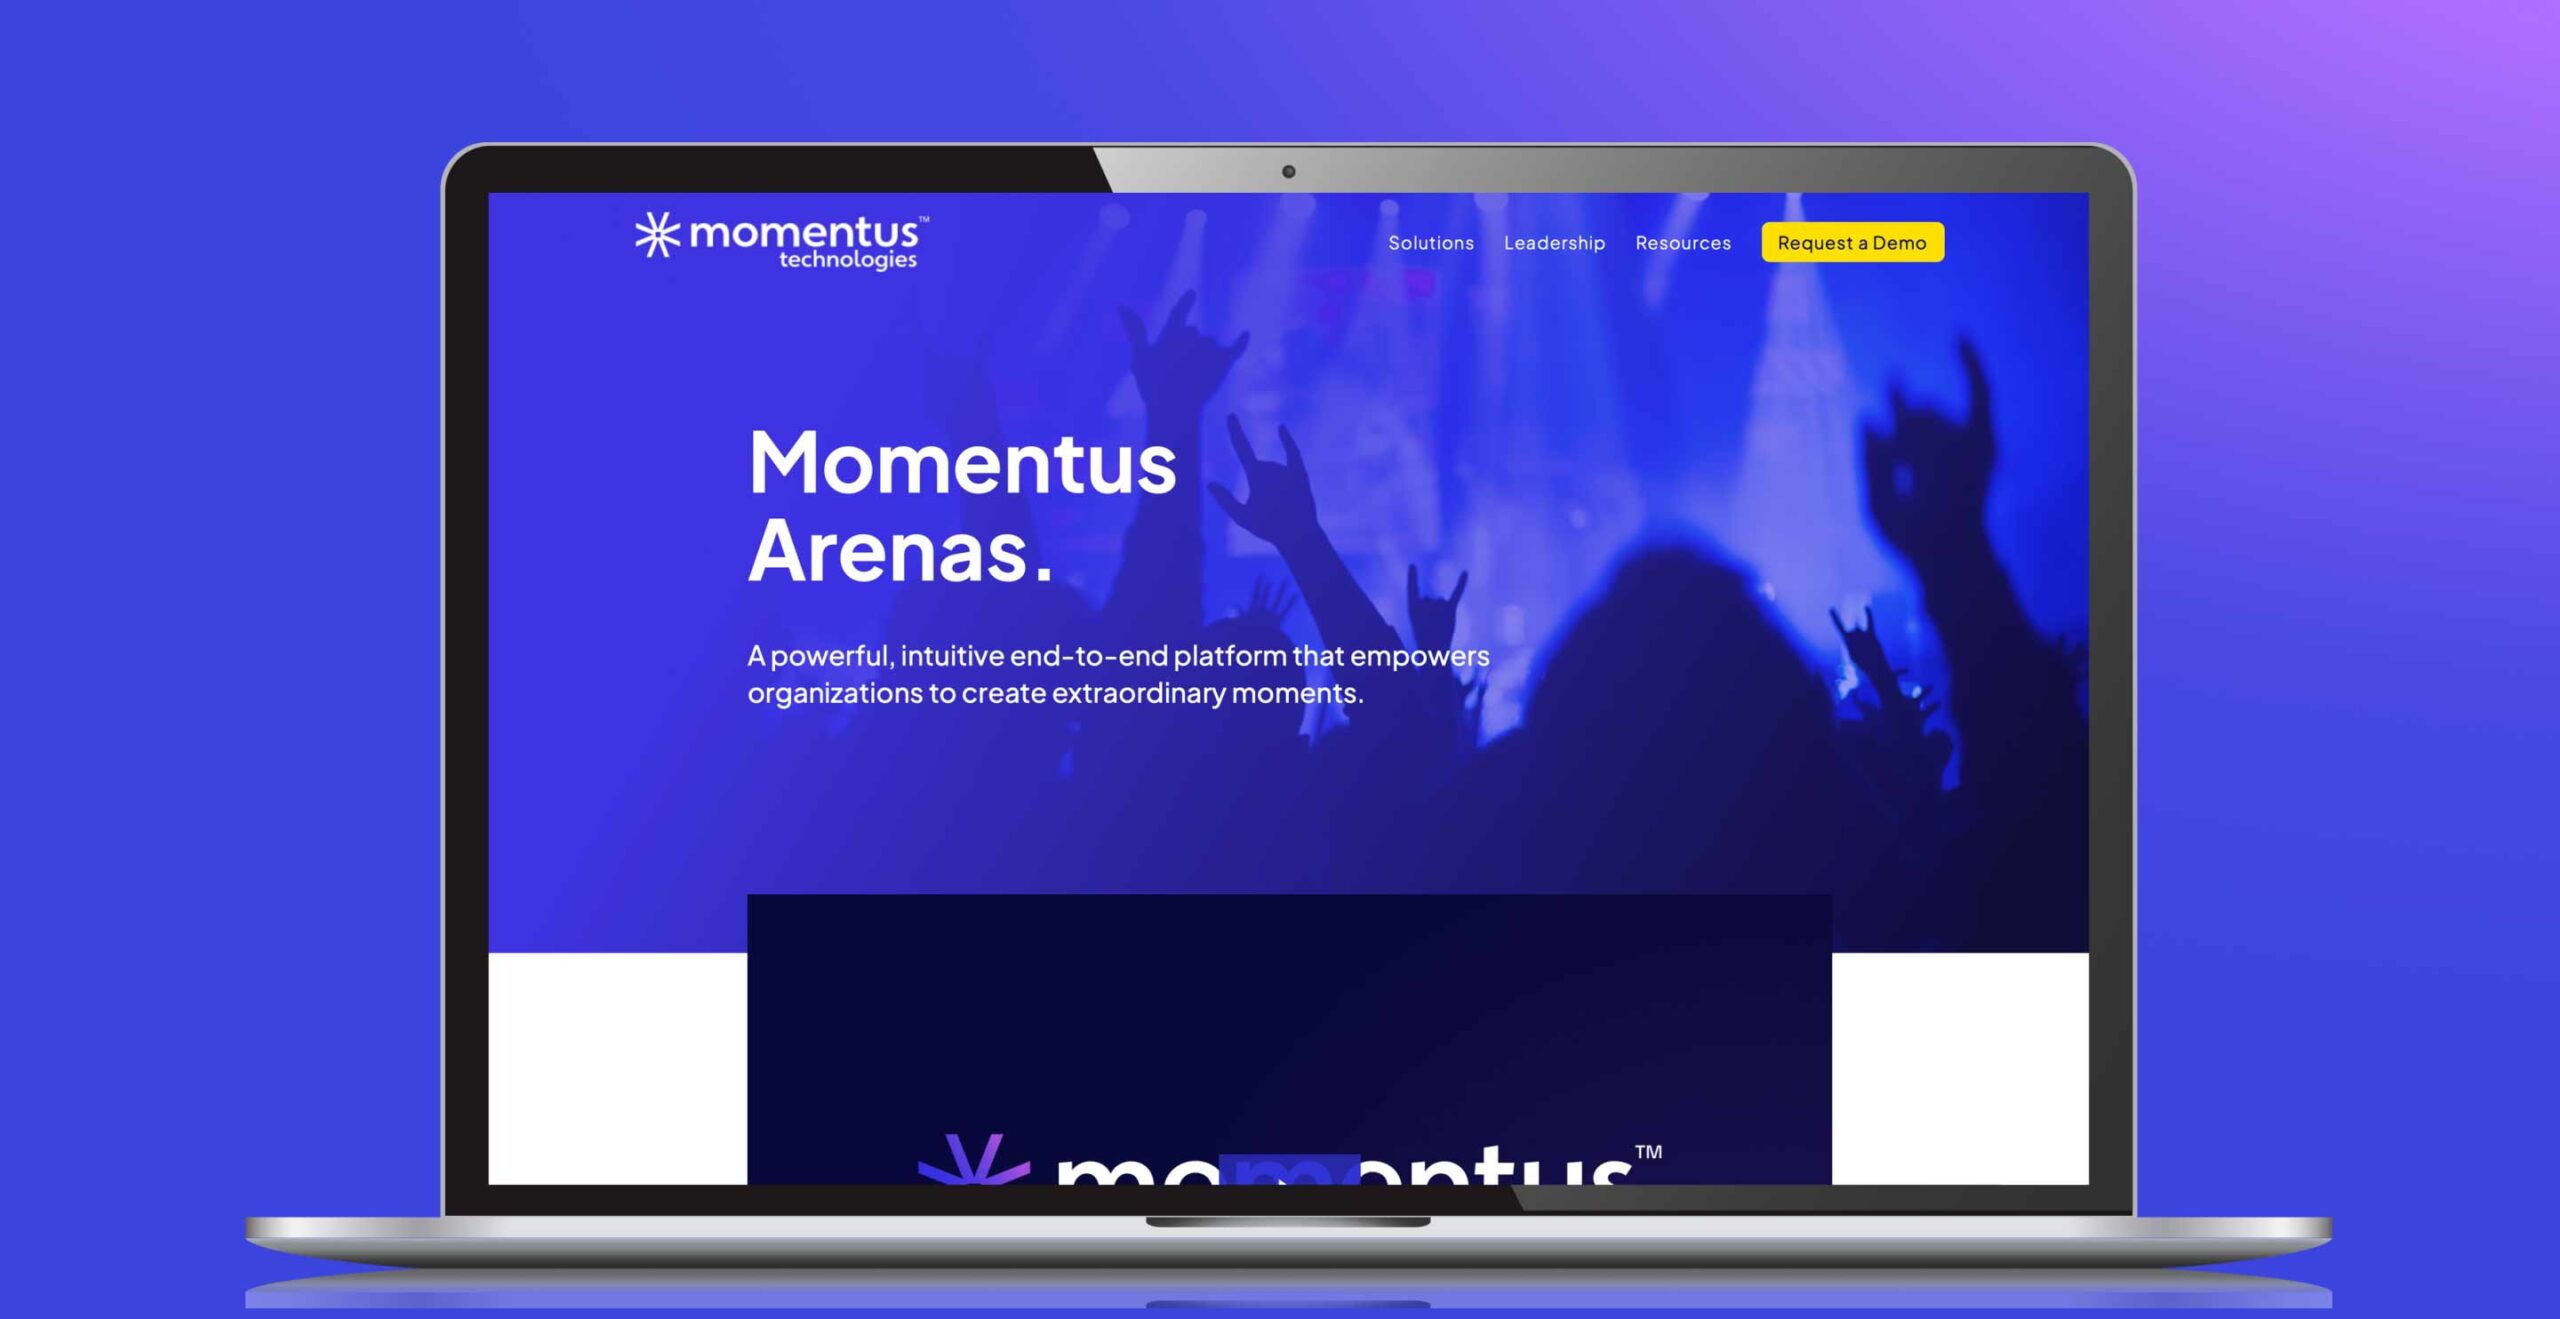 Momentus Technologies website on a laptop